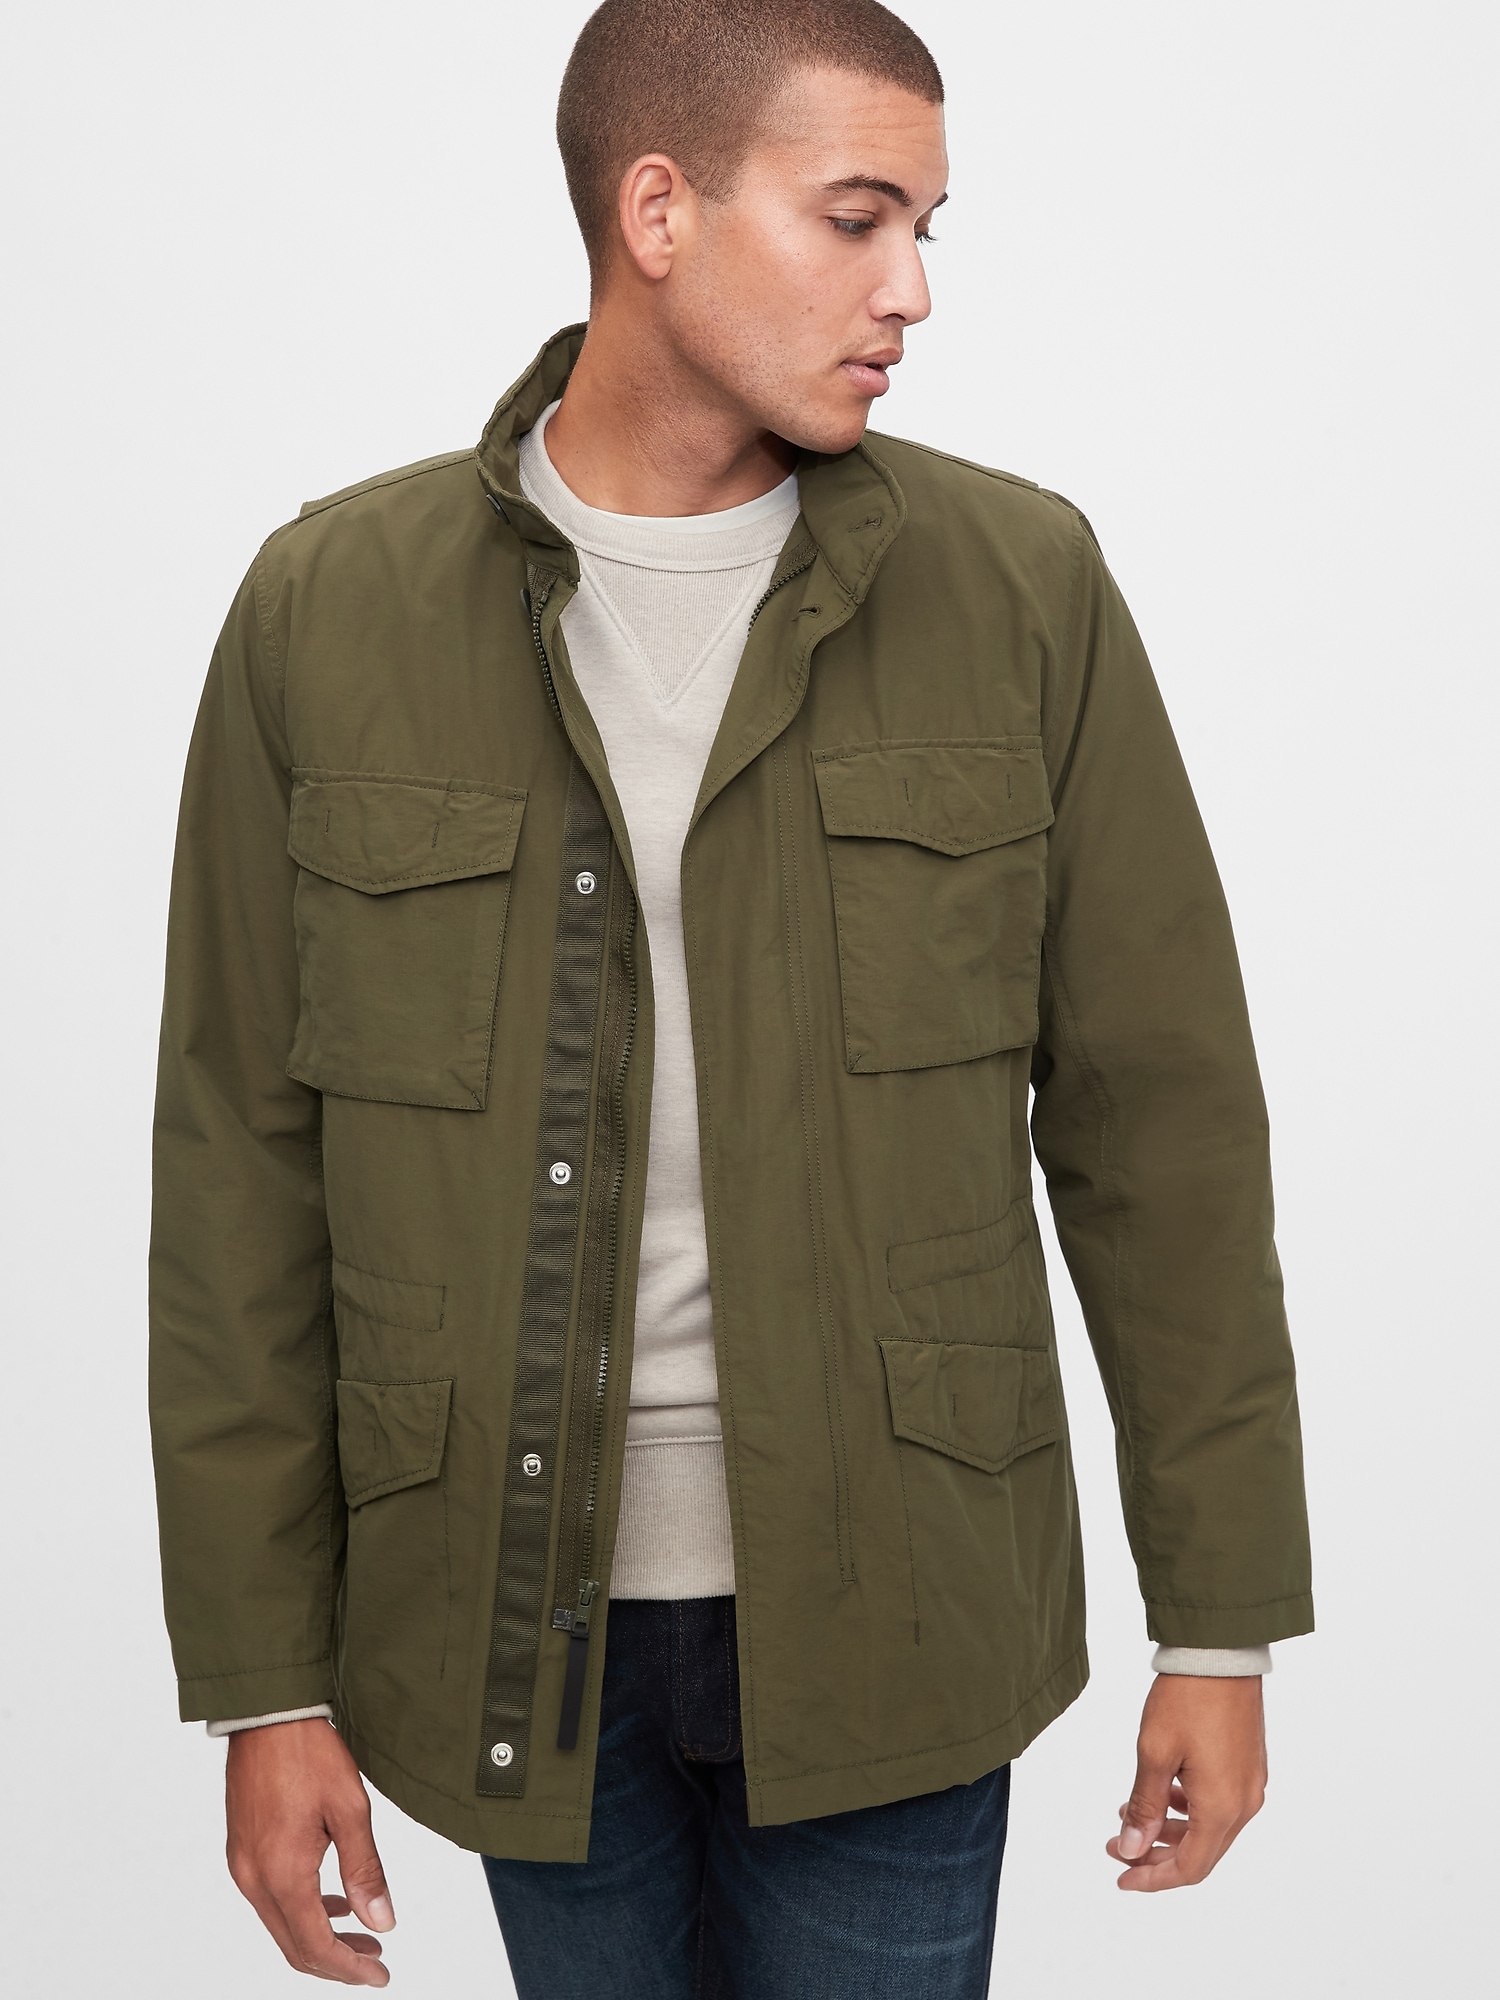 gap army green jacket